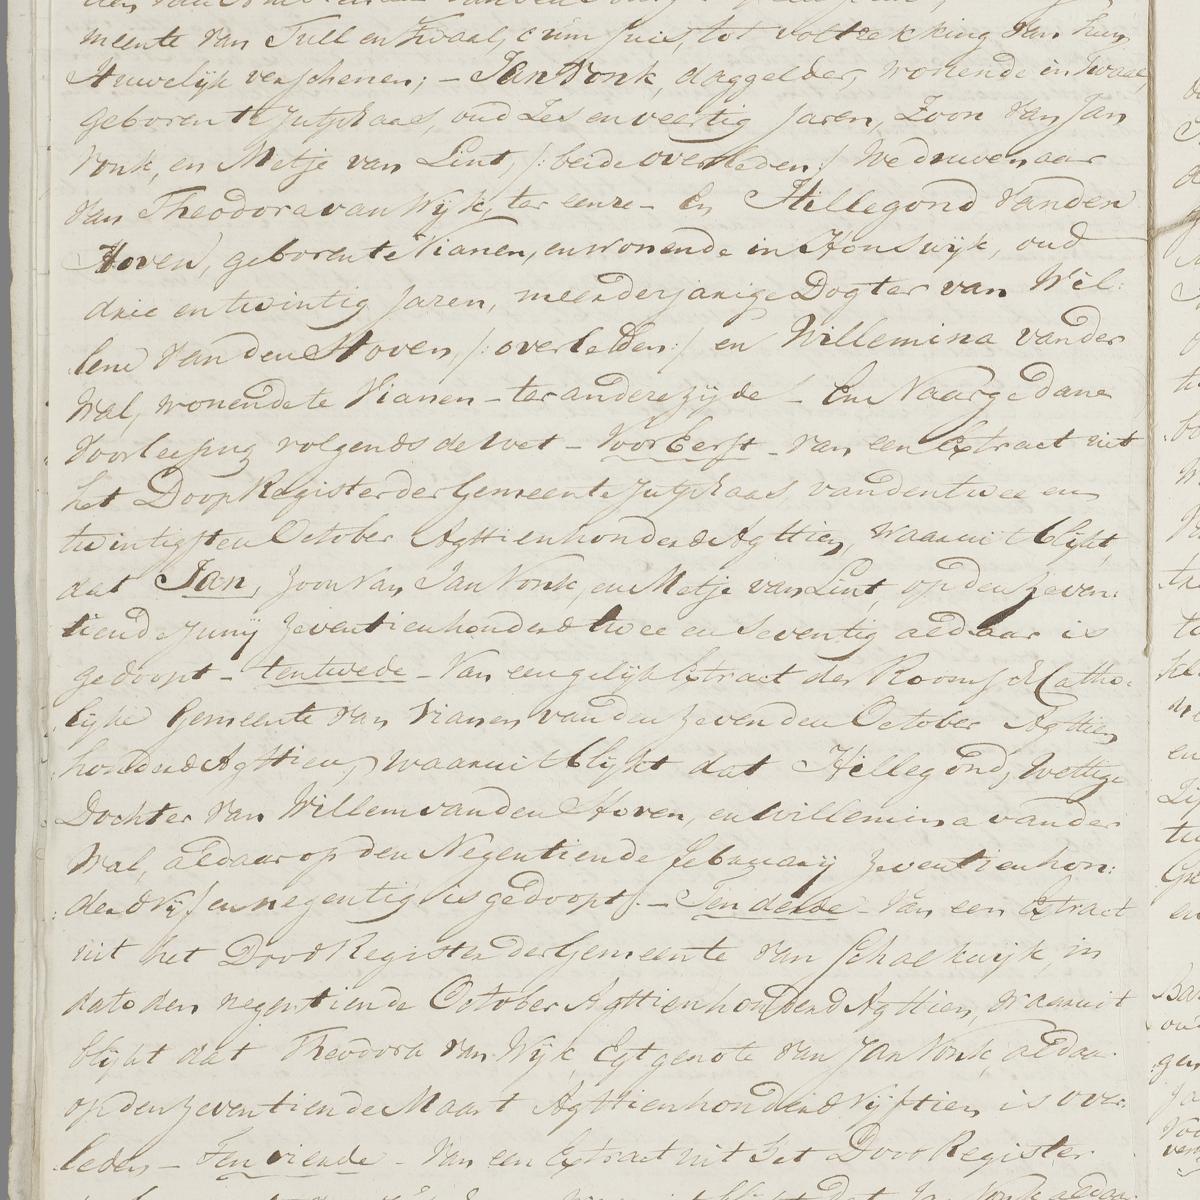 Civil registry of marriages, Tull en 't Waal, 1818, record 4